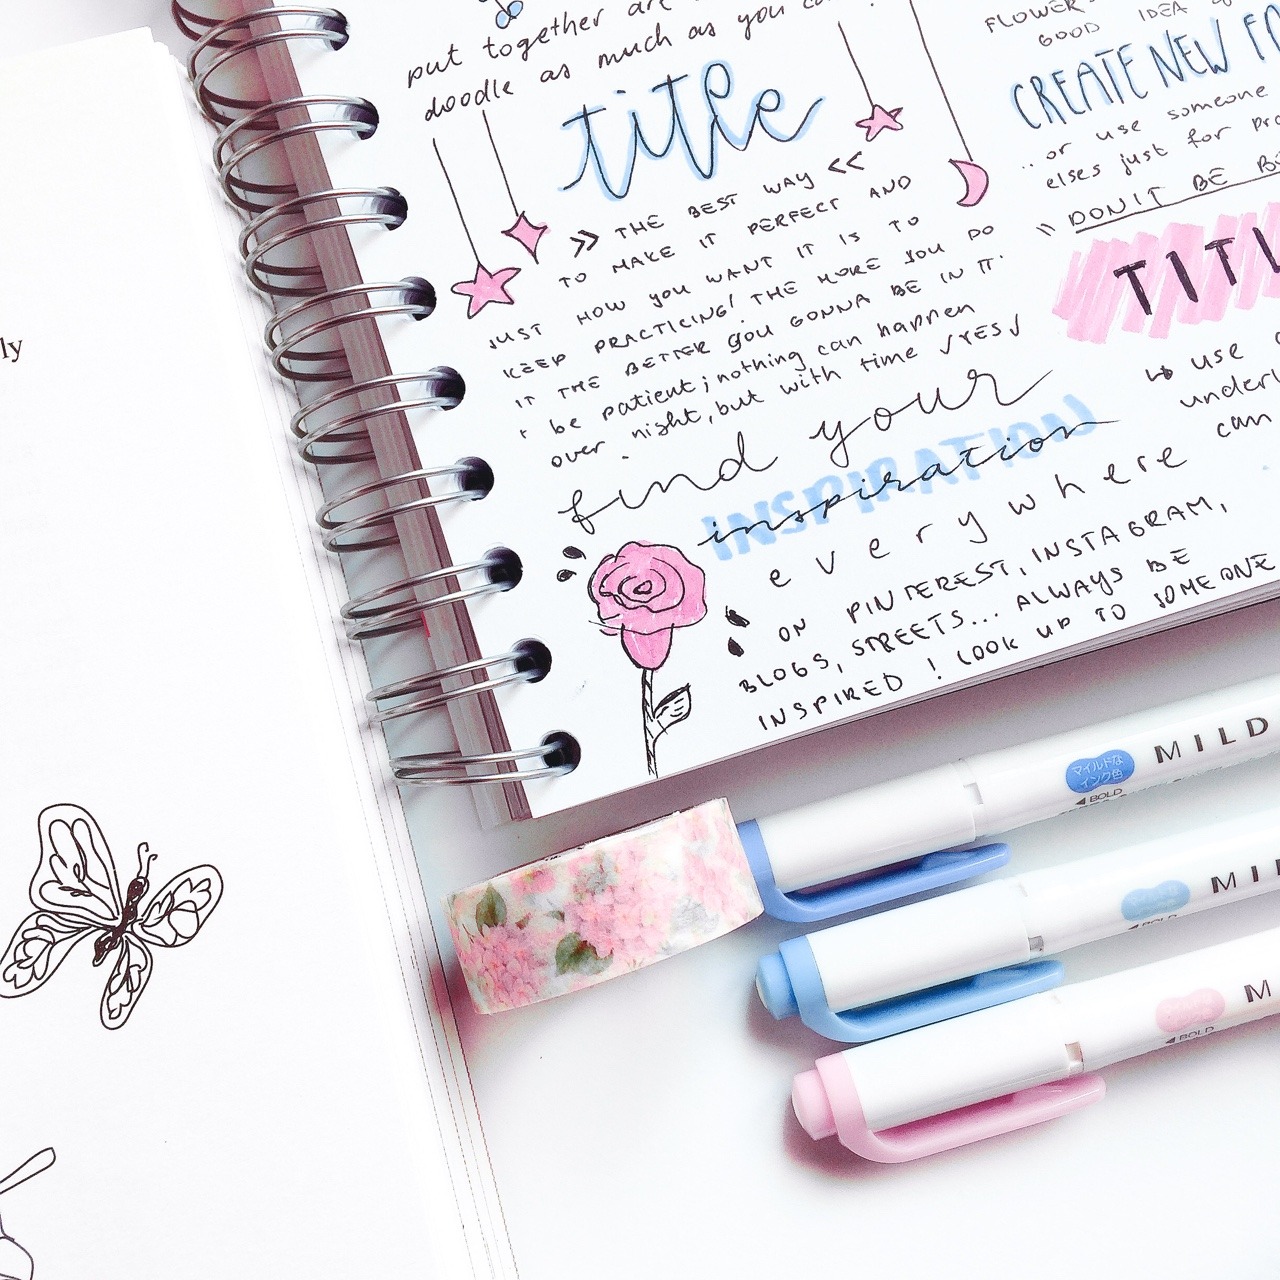 lisha's journal on Tumblr: ♡ Pokémon Theme ♡